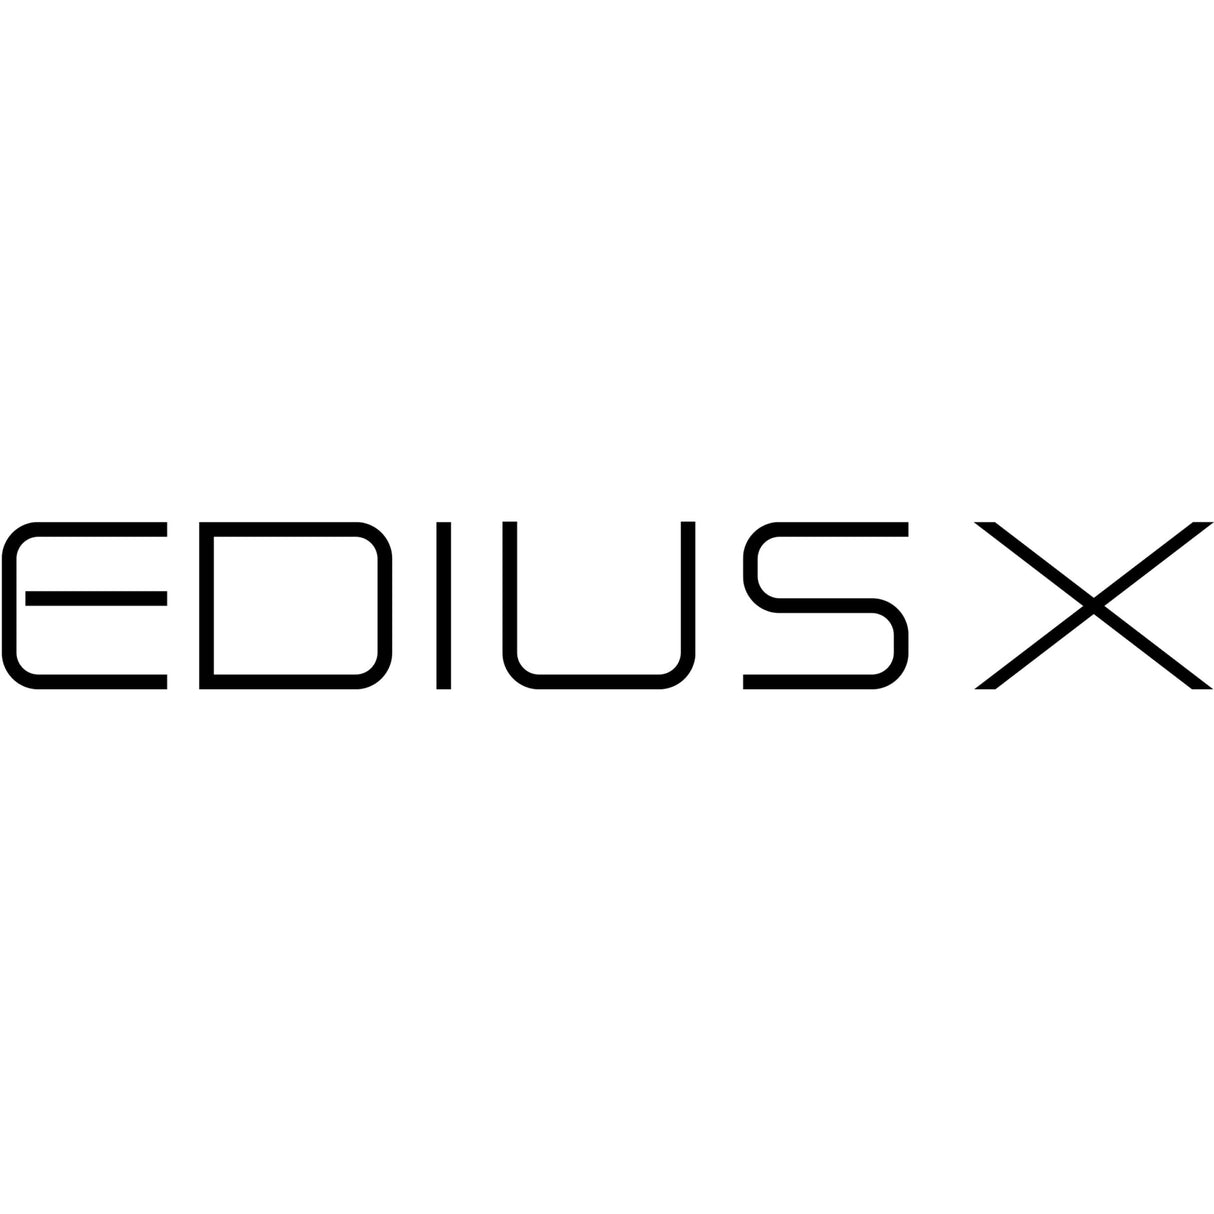 EDIUS DNxHD Option for EDIUS X Pro, Download Only